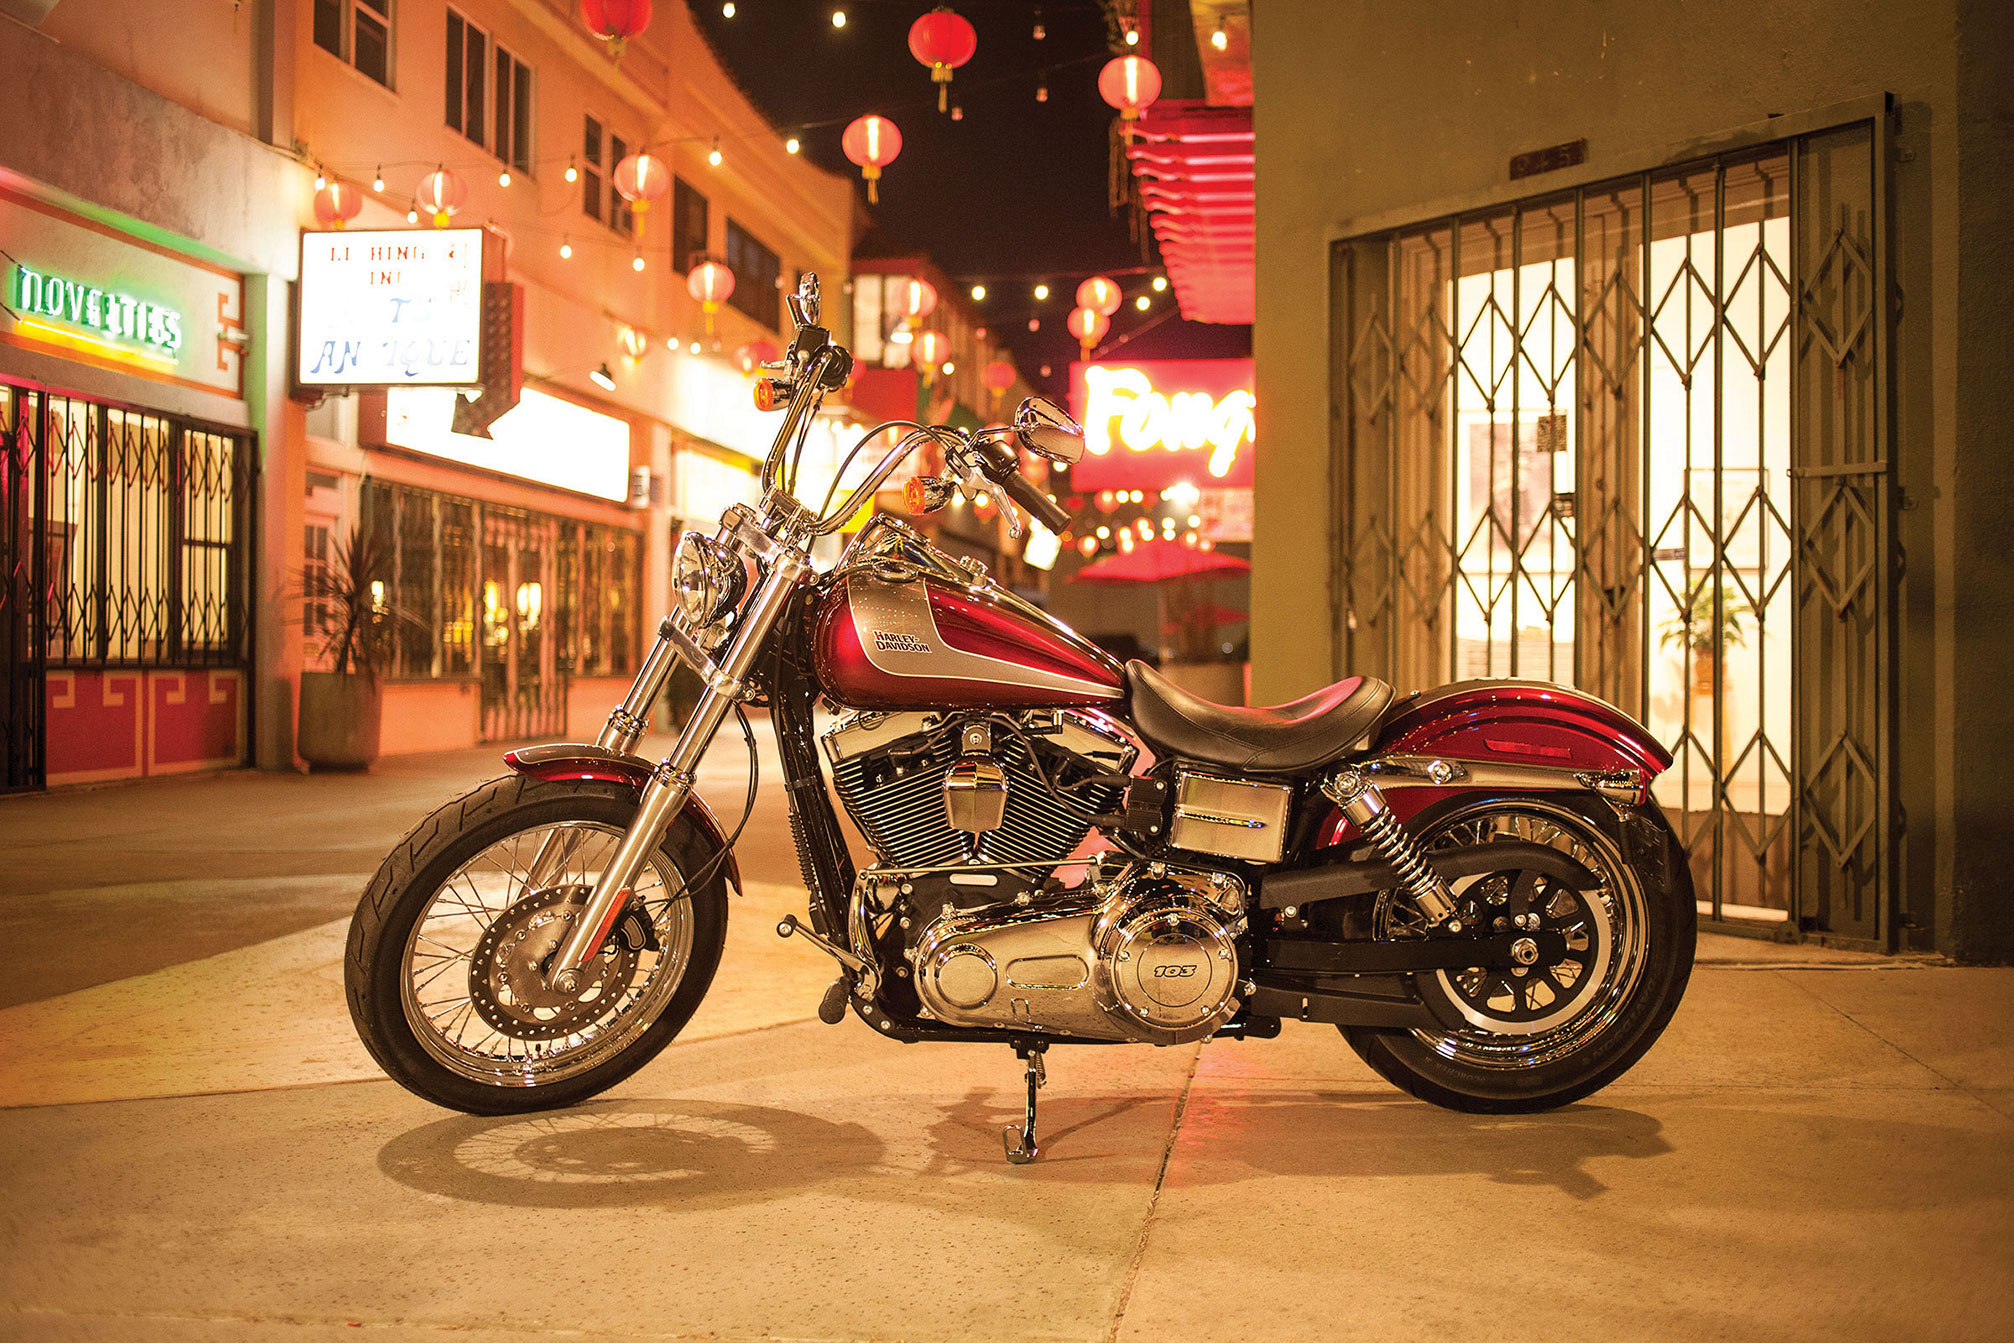 2014 Harley Davidson Fxdb Street Bob Review